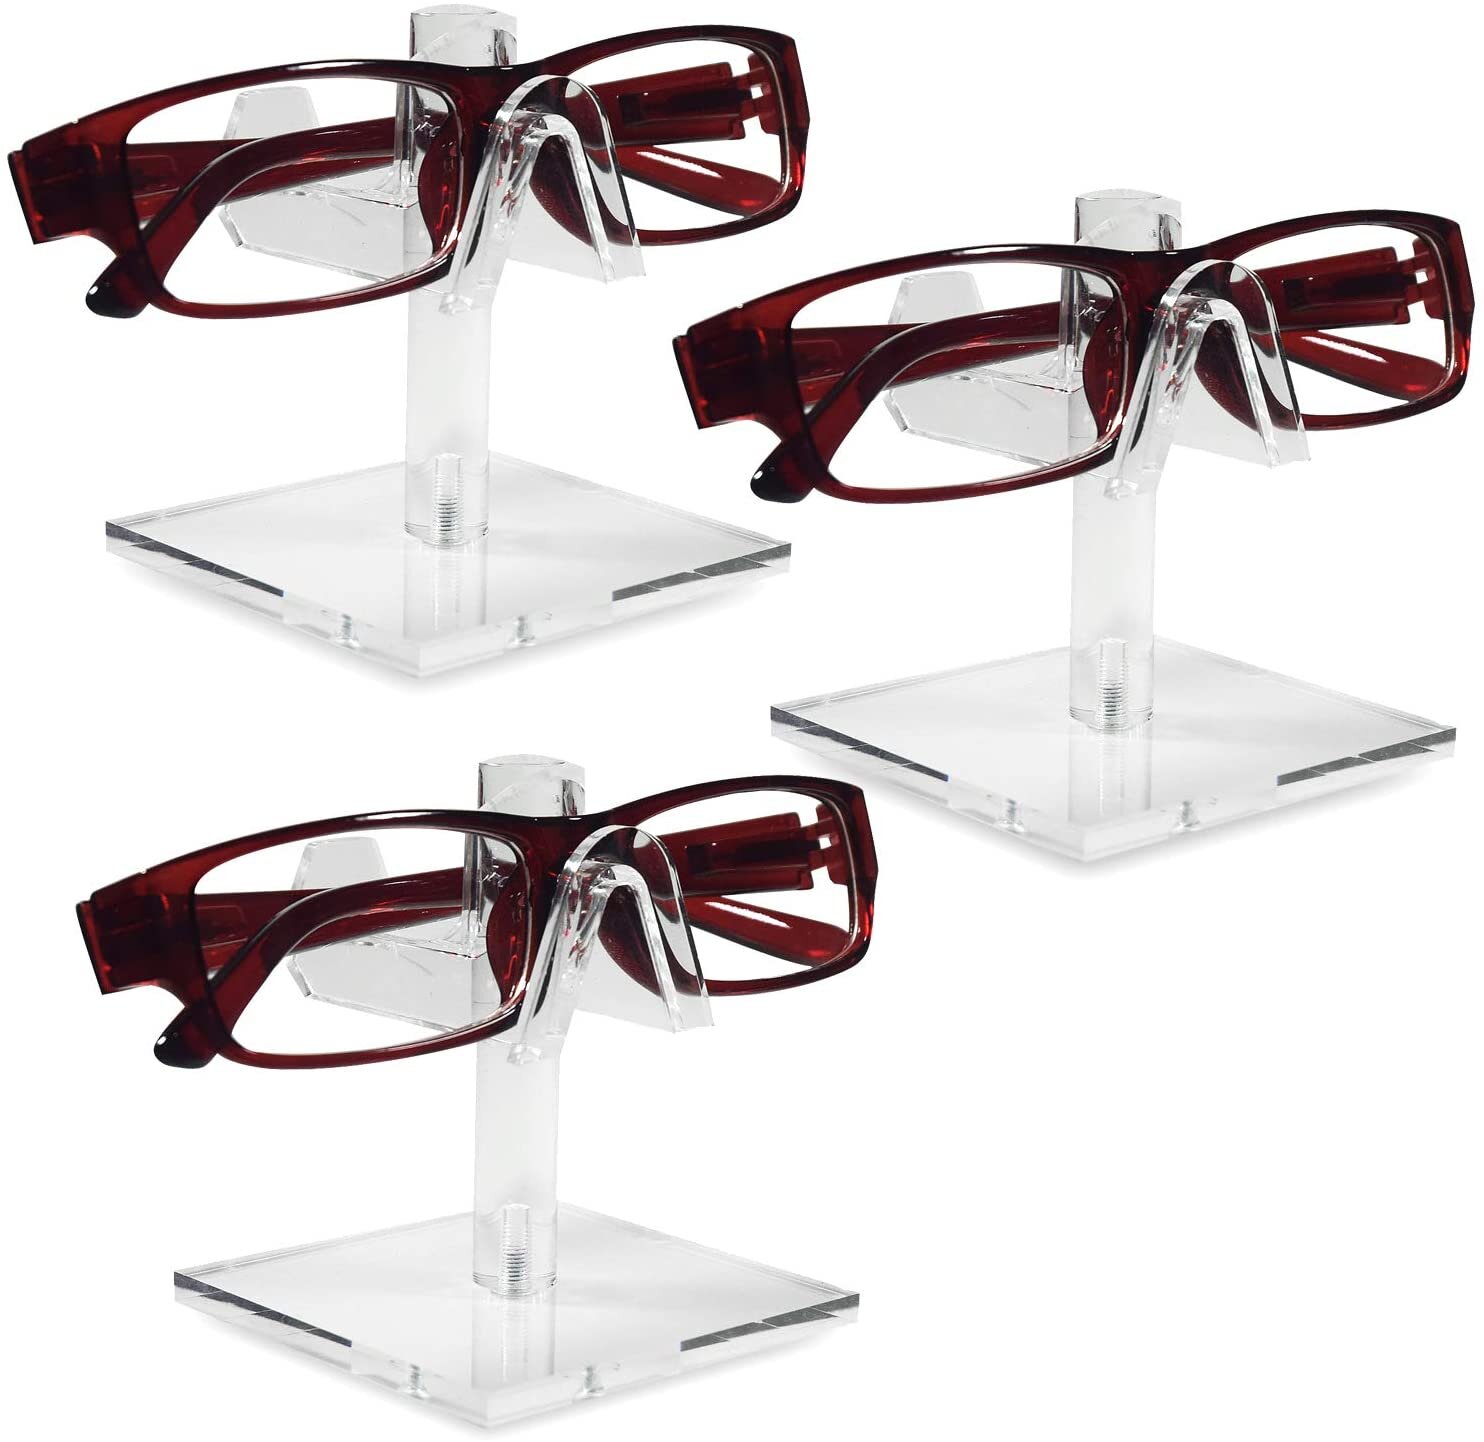 Sunglasses Frame Shelf Showcase Sale Show for 6 Pairs Eyeglasses Sunglasses Use Transparent Vending Display Rack